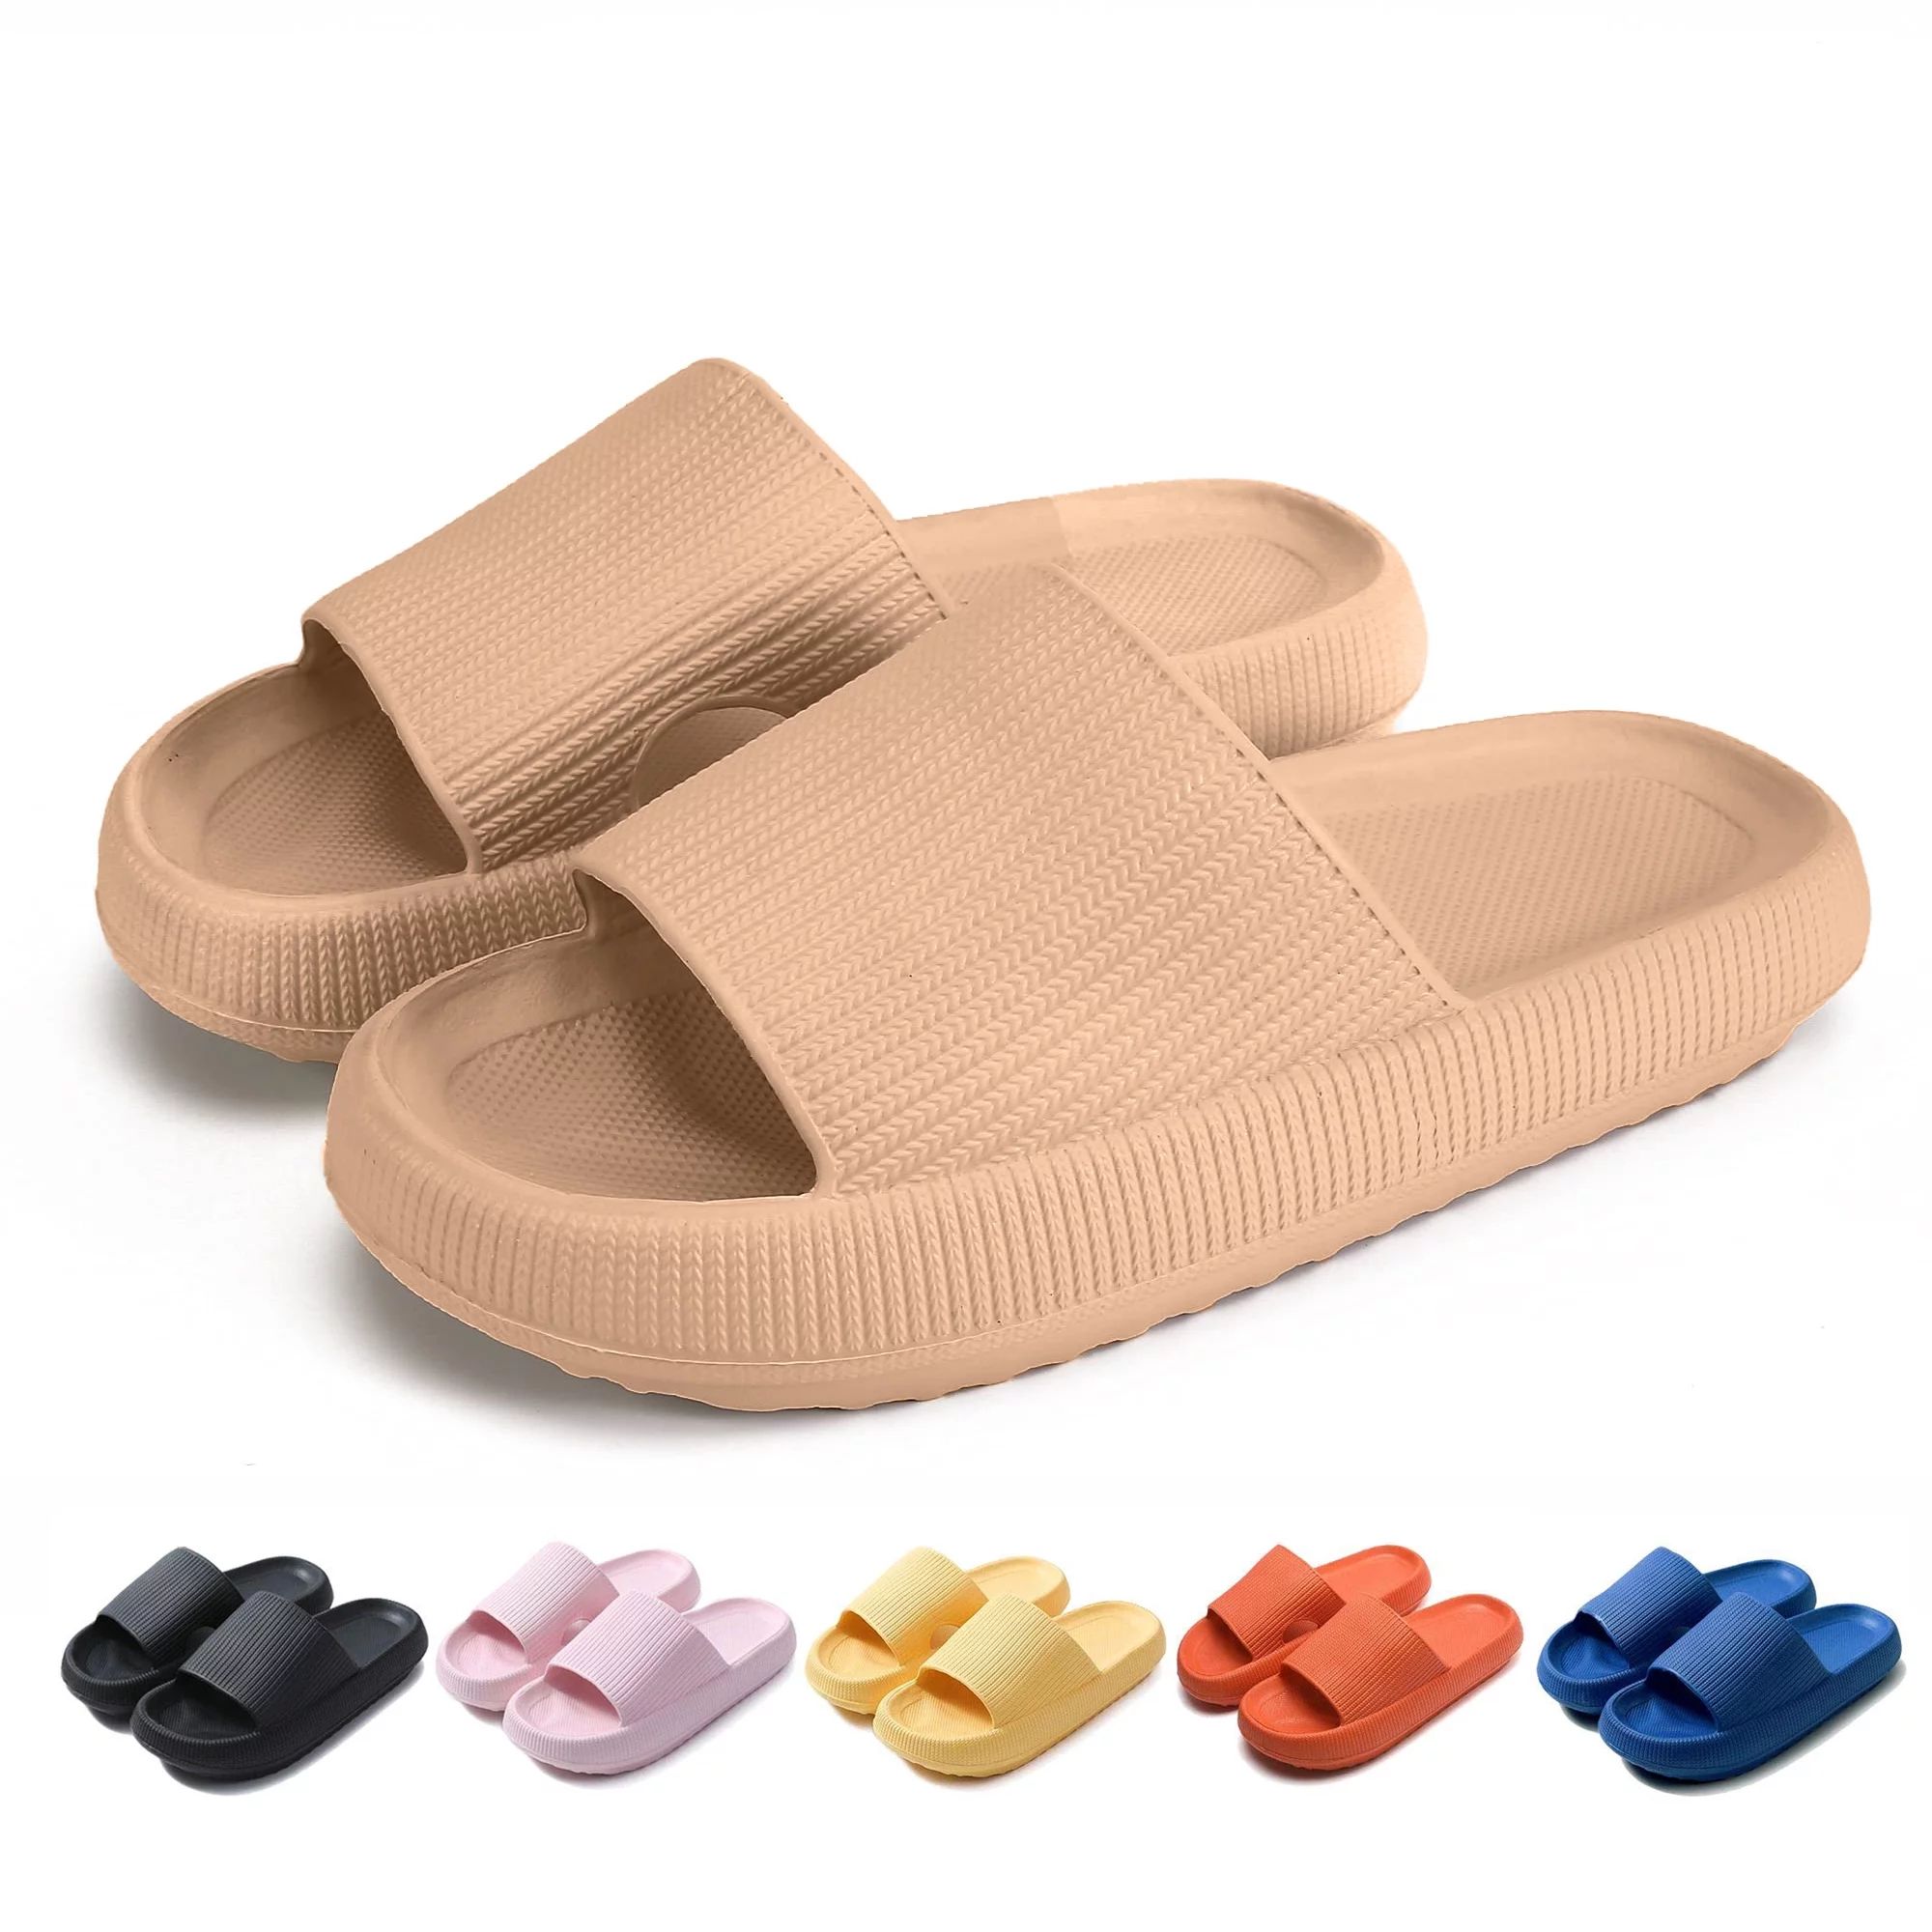 Shower Shoes Pillow Slides Sandals Women Men House Slippers , Beige 42-43, Size W 10-11 M 8.5-9.5 | Walmart (US)